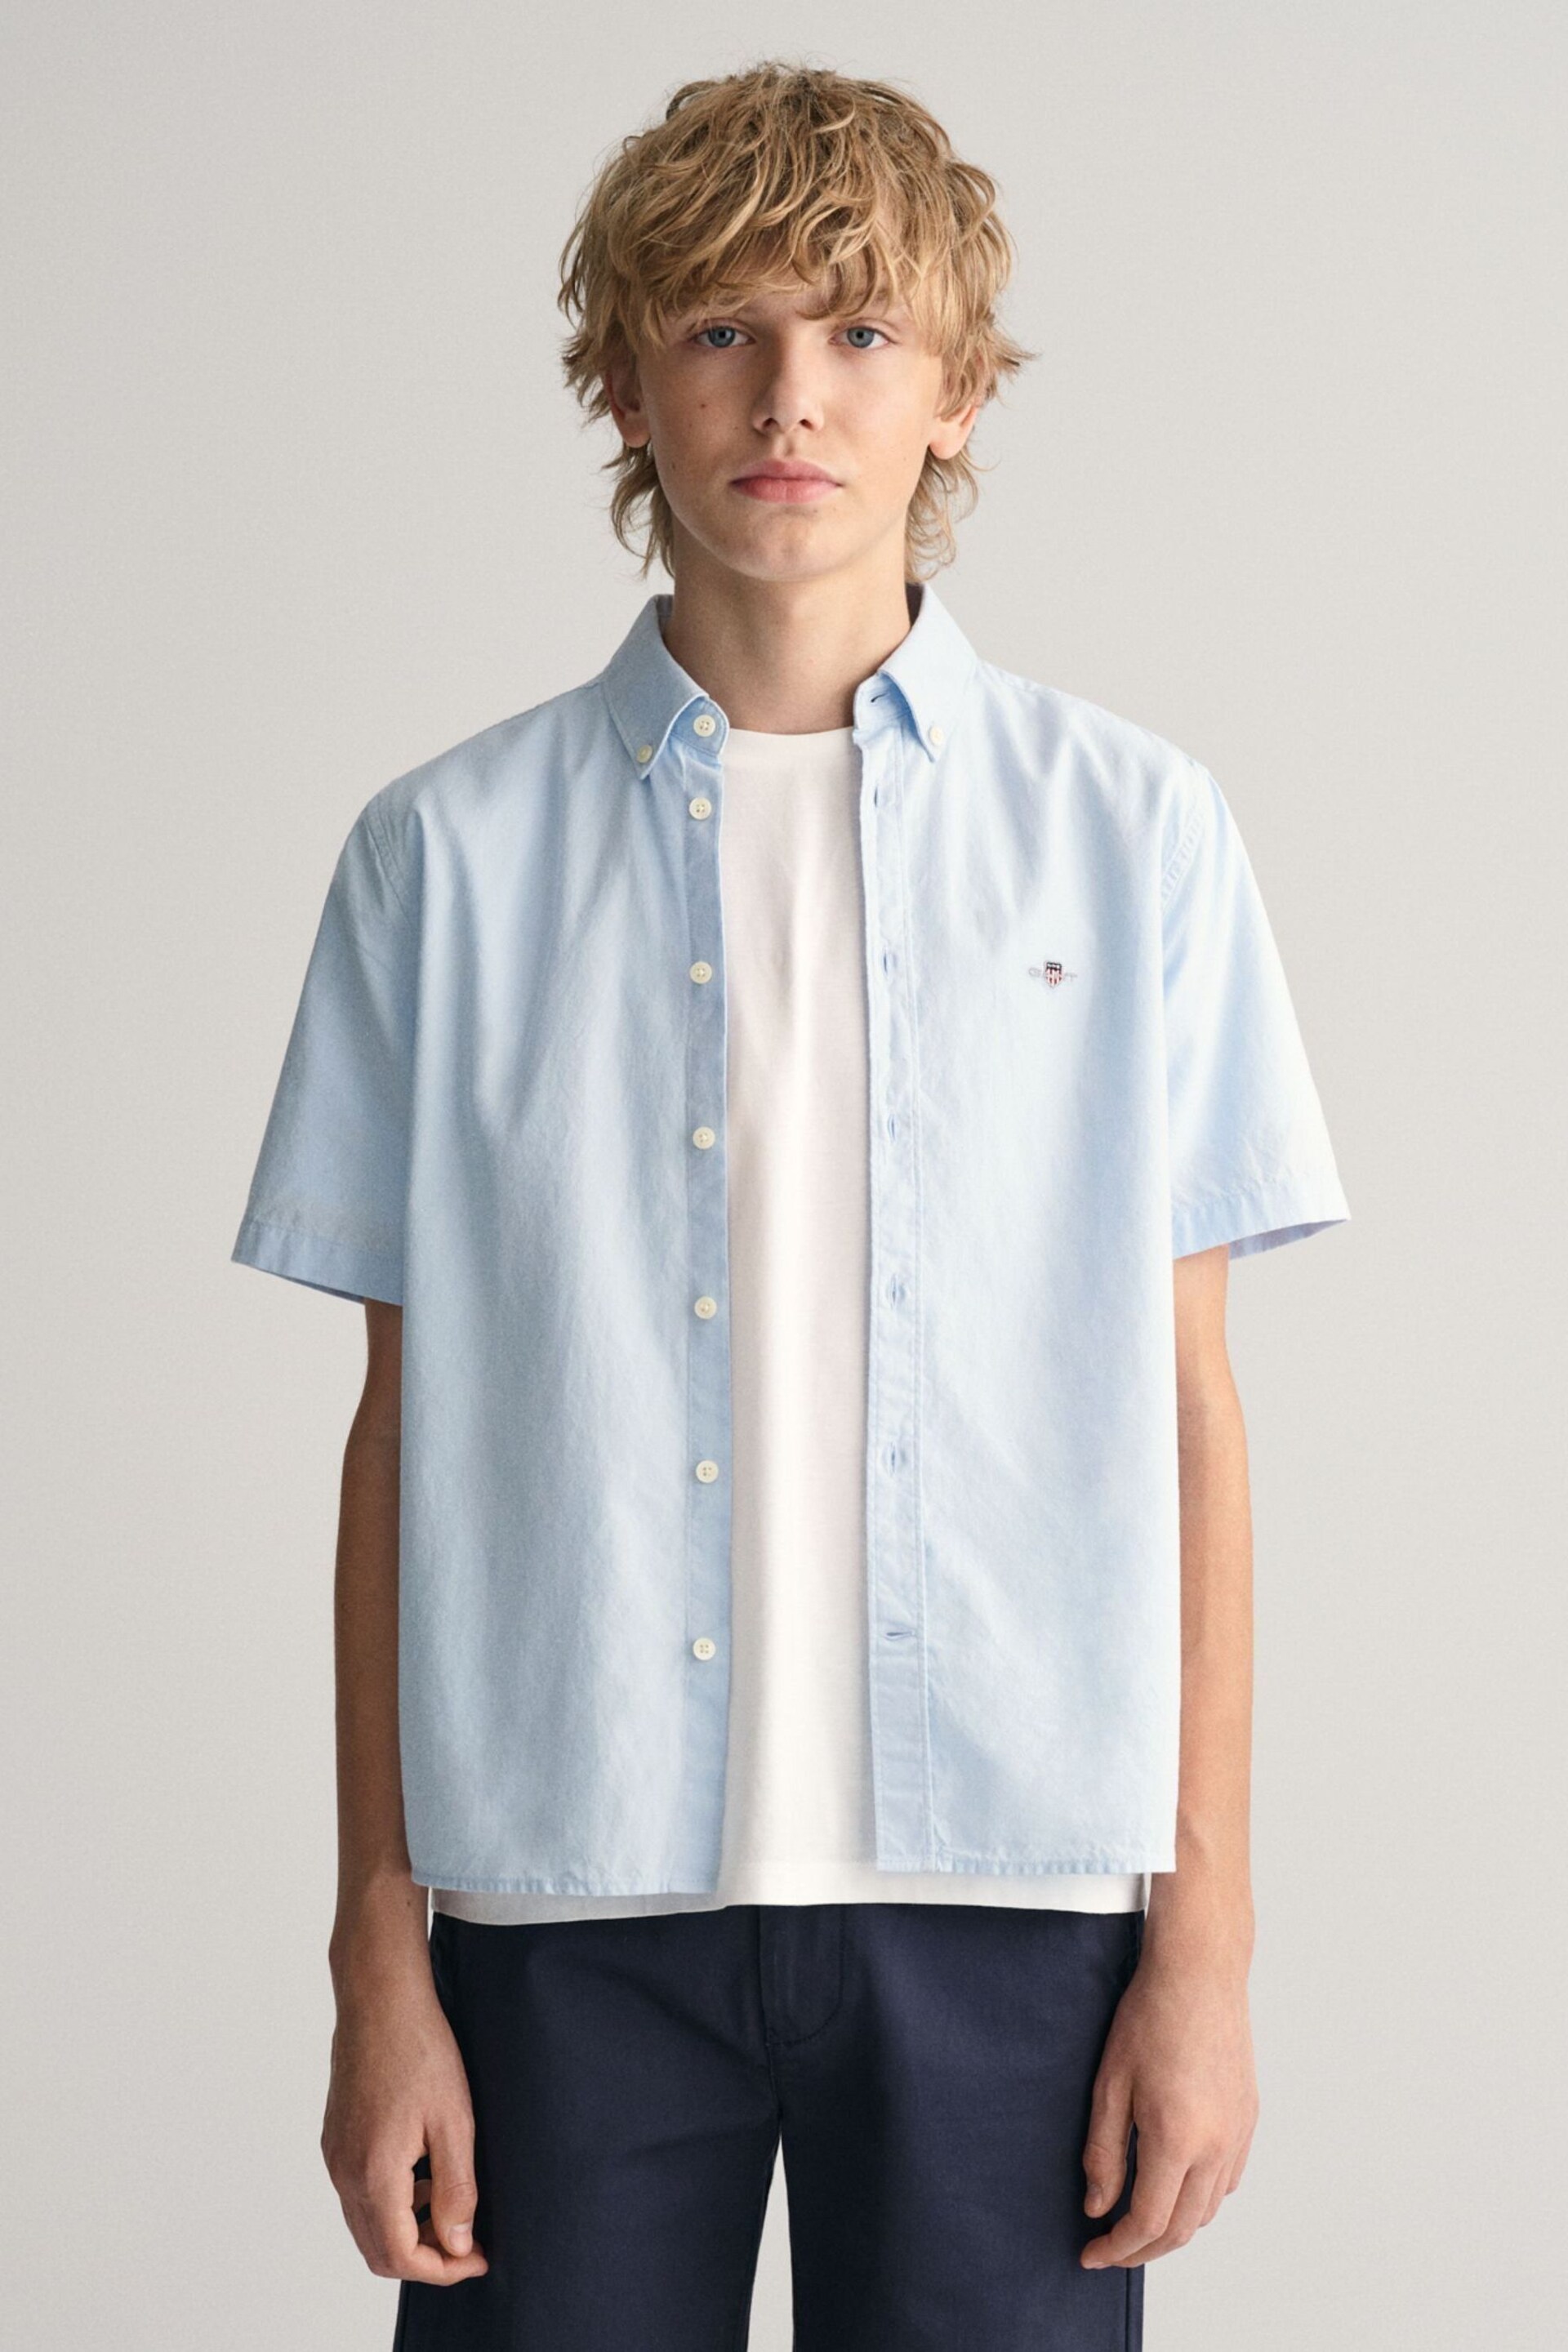 GANT Blue Boys Oxford Short Sleeve Shirt - Image 1 of 6